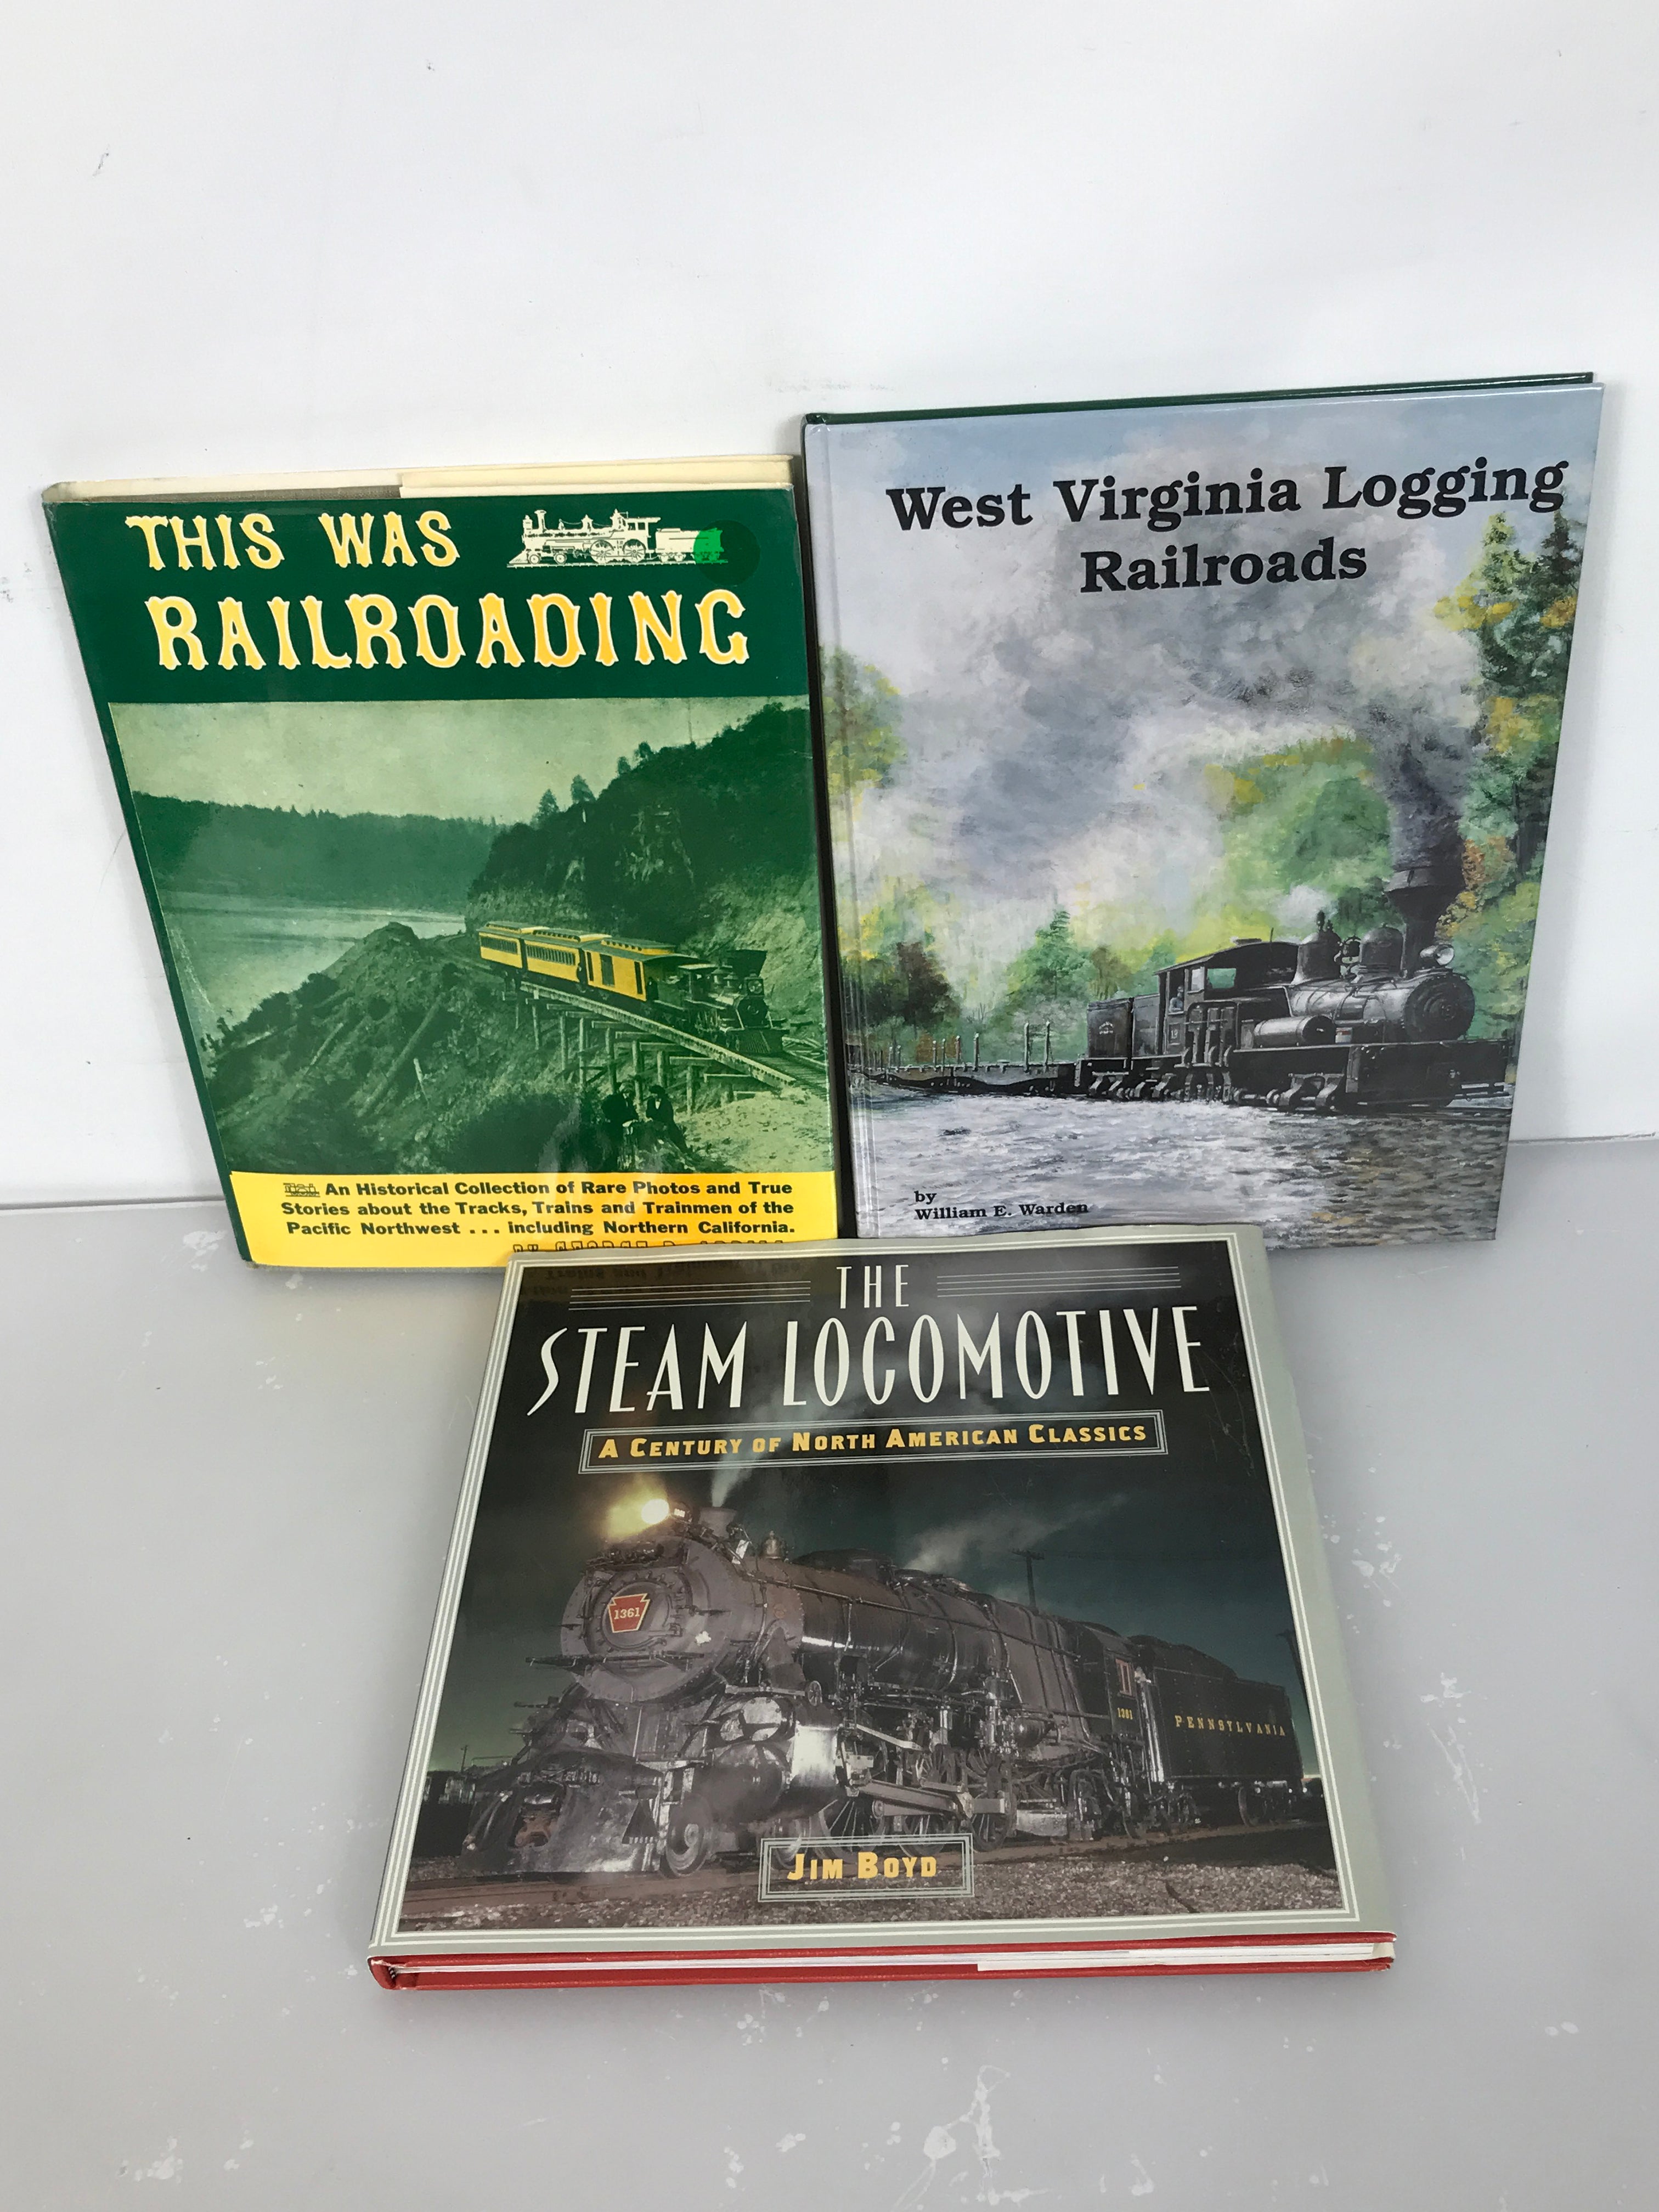 Lot of 3 American Railroad History Books: This Was Railroading (1958), WV Logging Railroads (1993), The Steam Locomotive (2000) HC DJ